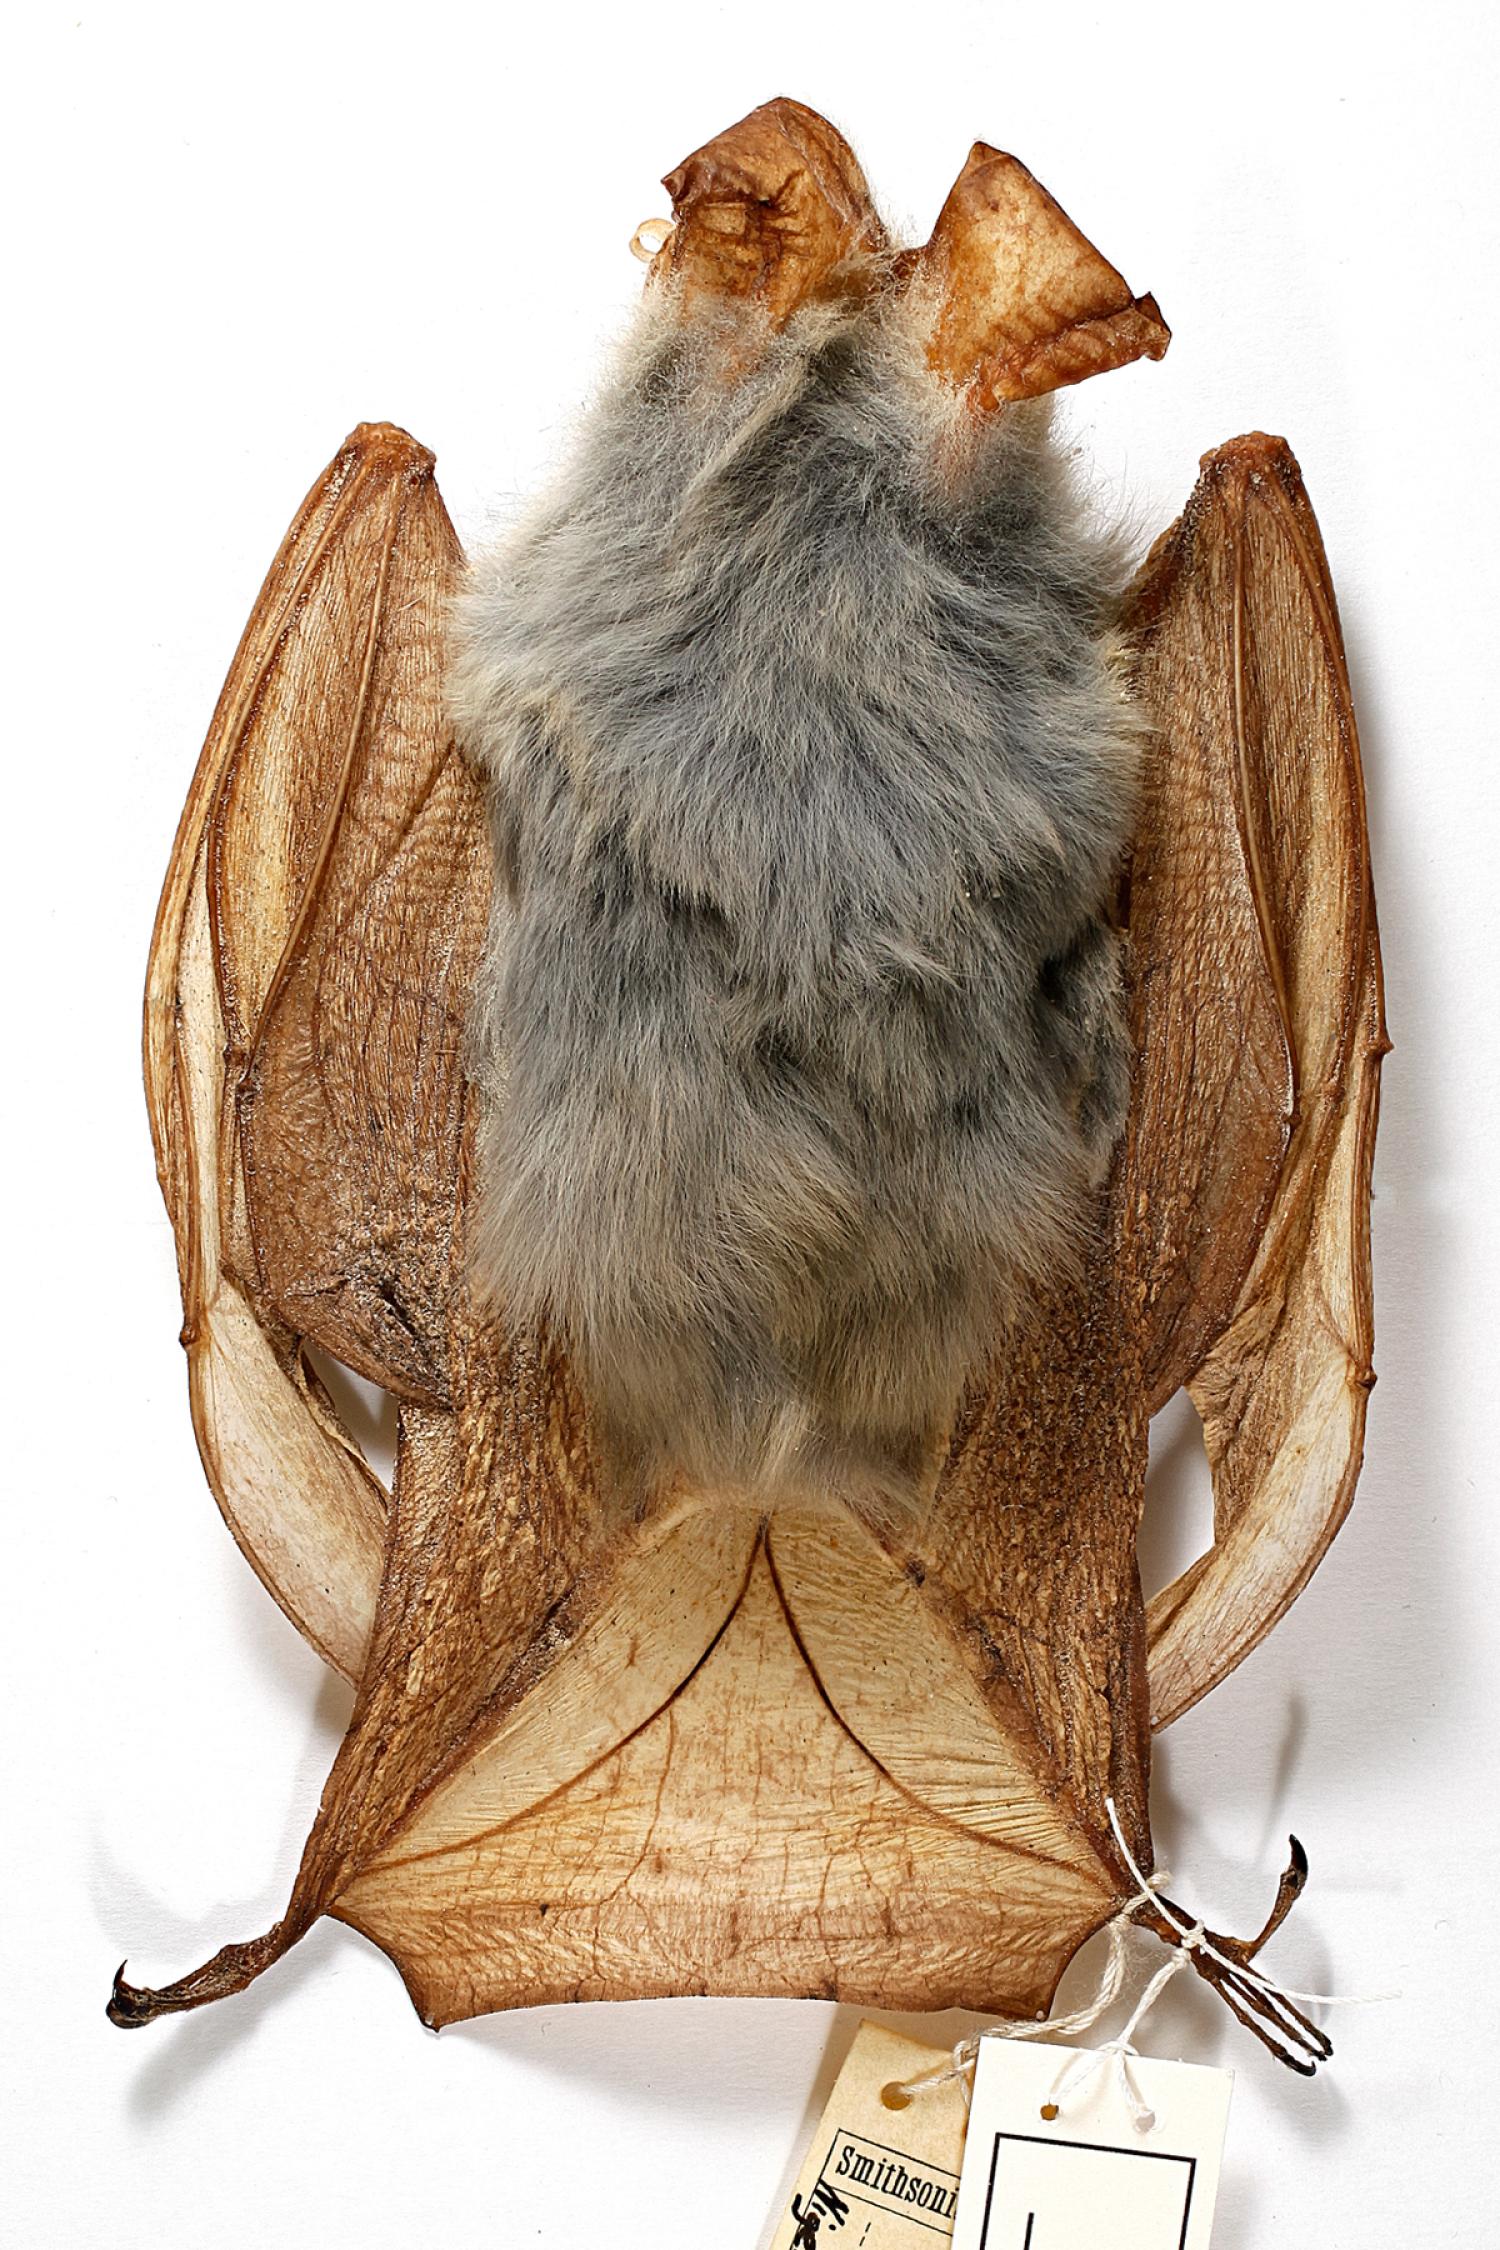 Yellow-winged bat (Lavia frons)